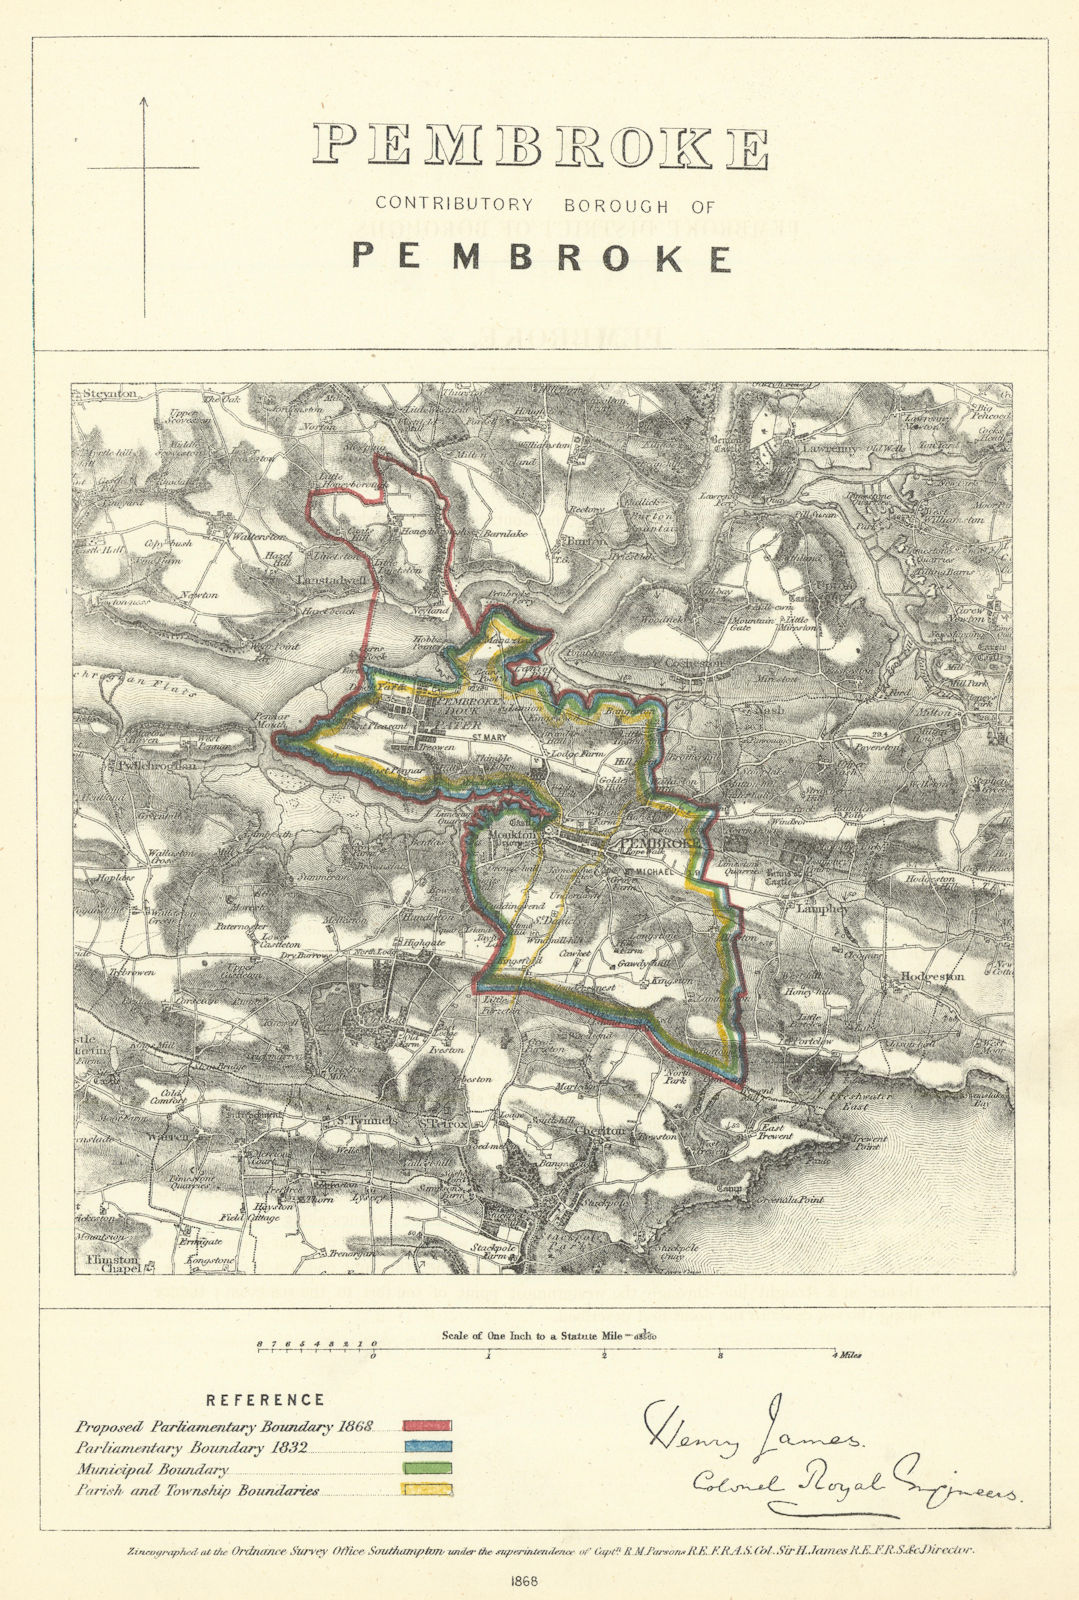 Pembroke Contributory Borough of Pembroke. JAMES. Boundary Commission 1868 map